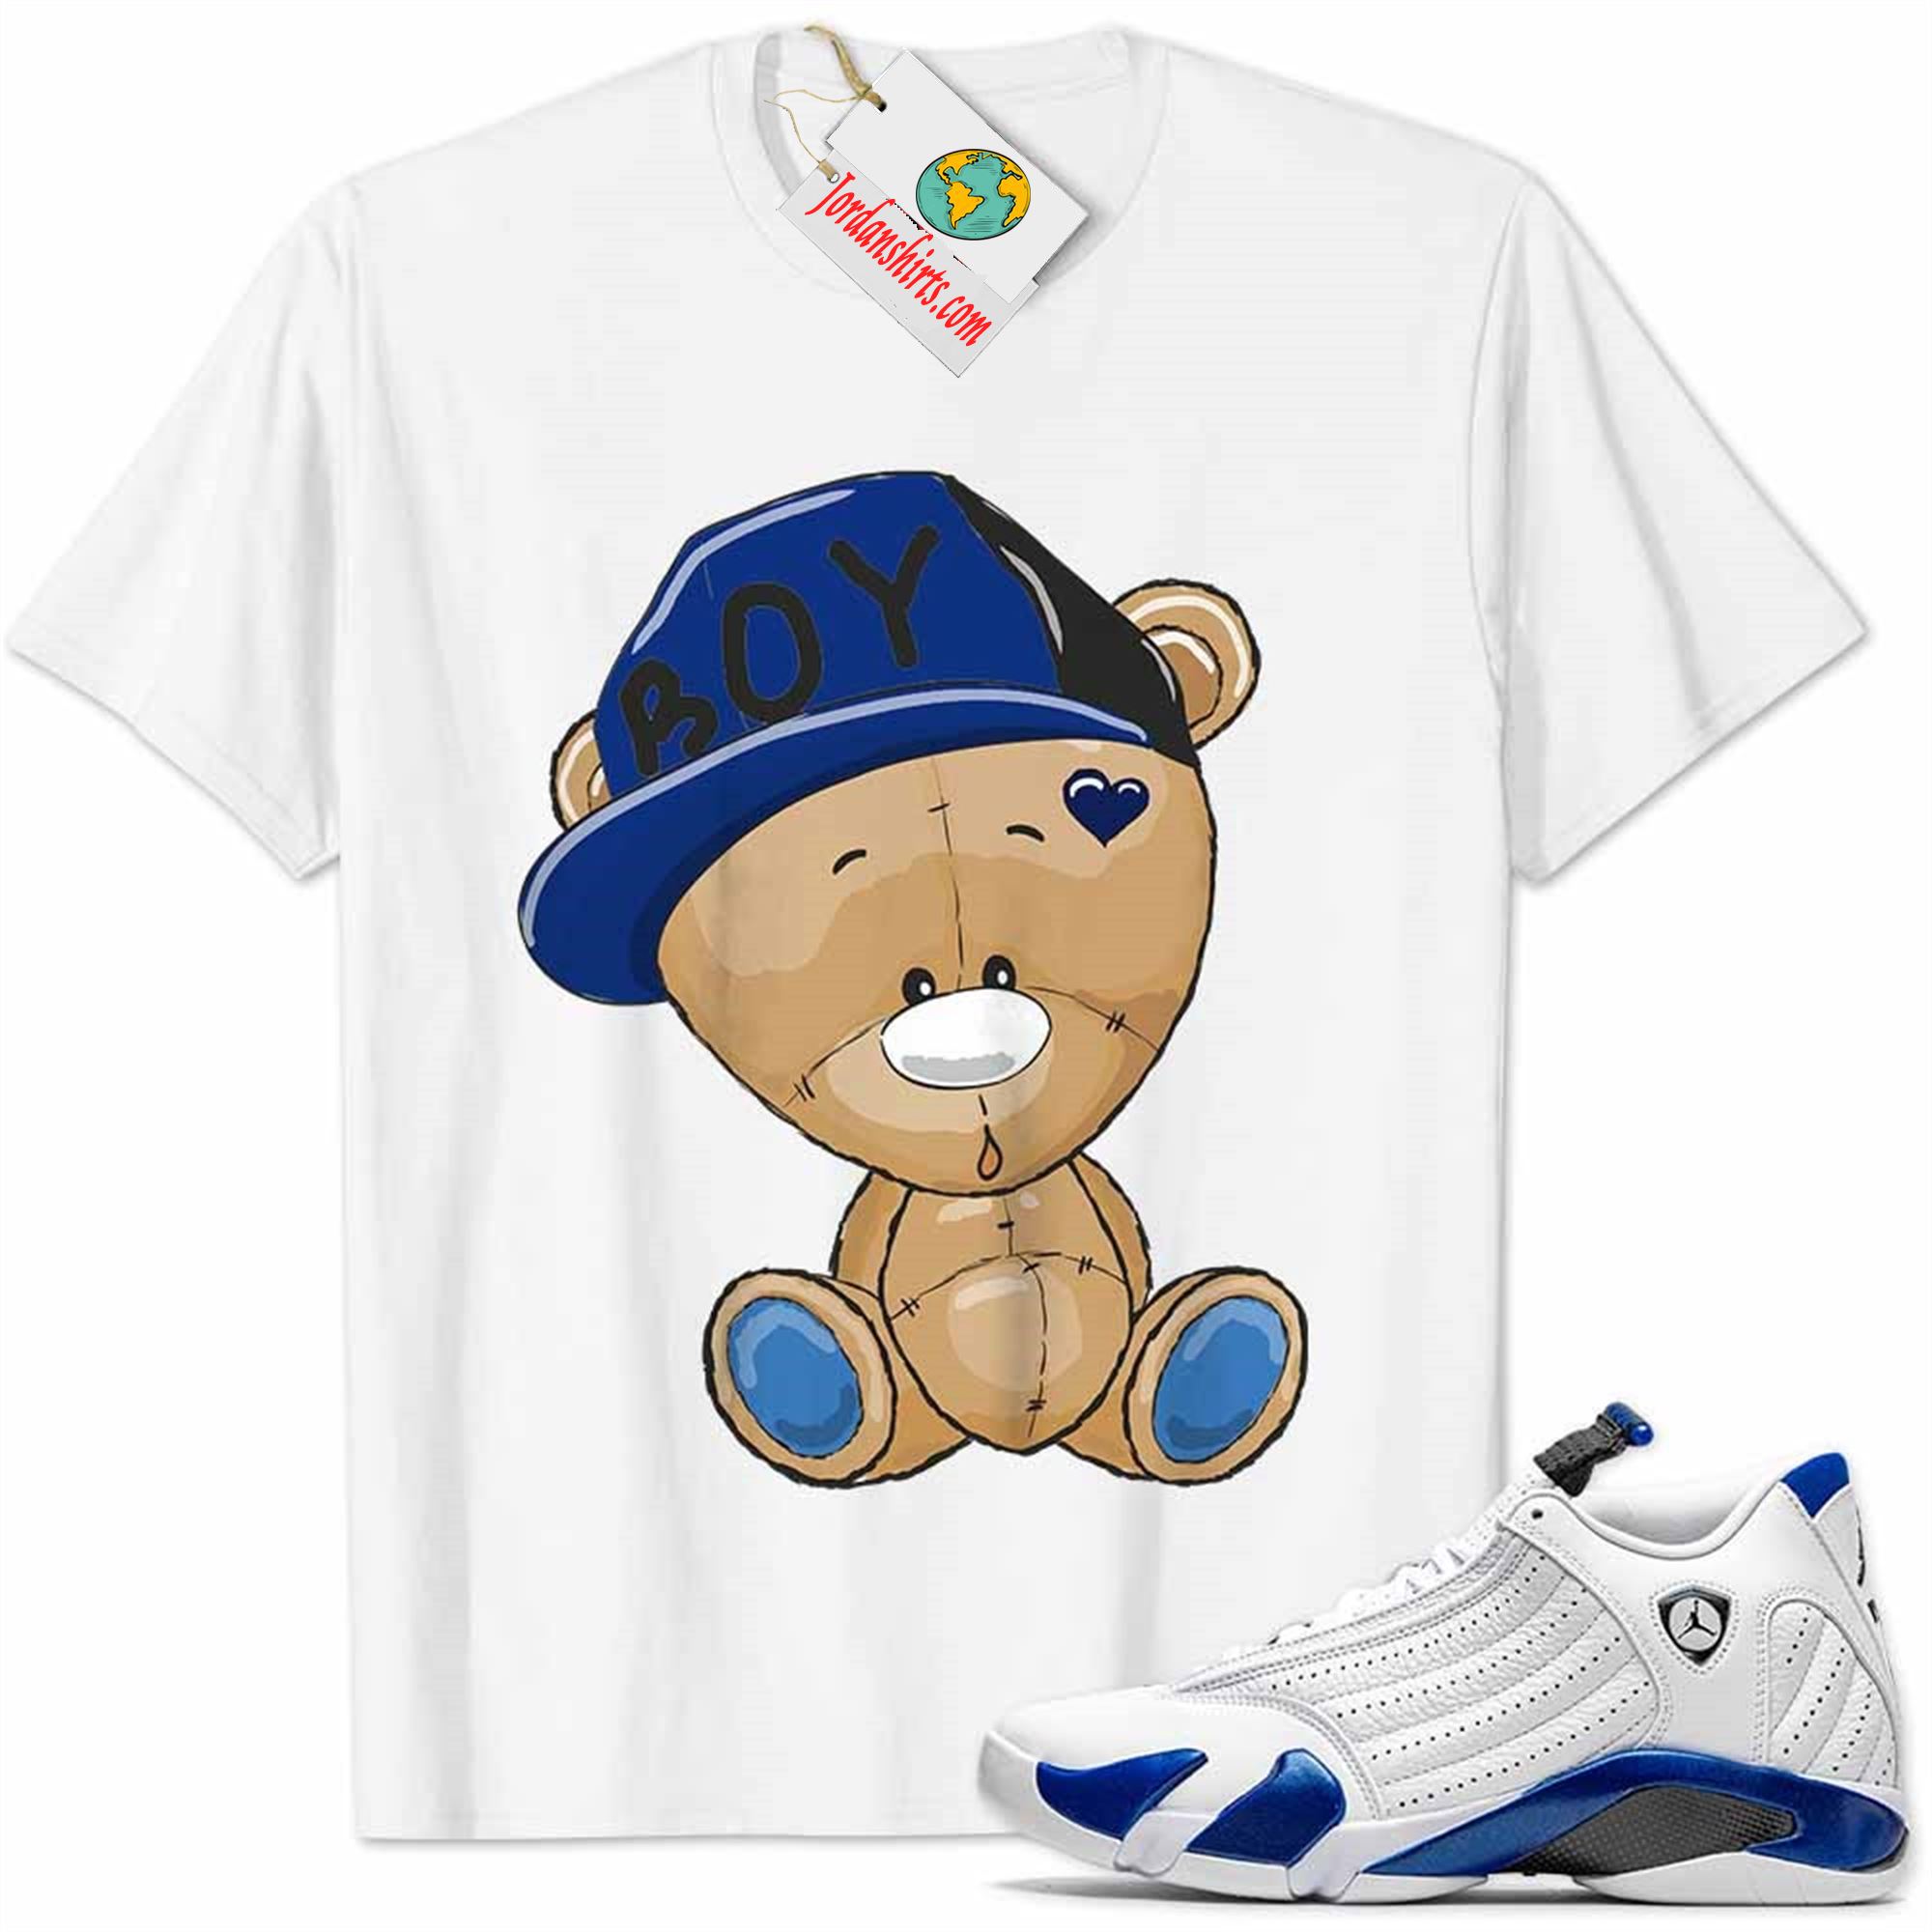 Jordan 14 Shirt, Jordan 14 Hyper Royal Shirt Cute Baby Teddy Bear White Plus Size Up To 5xl